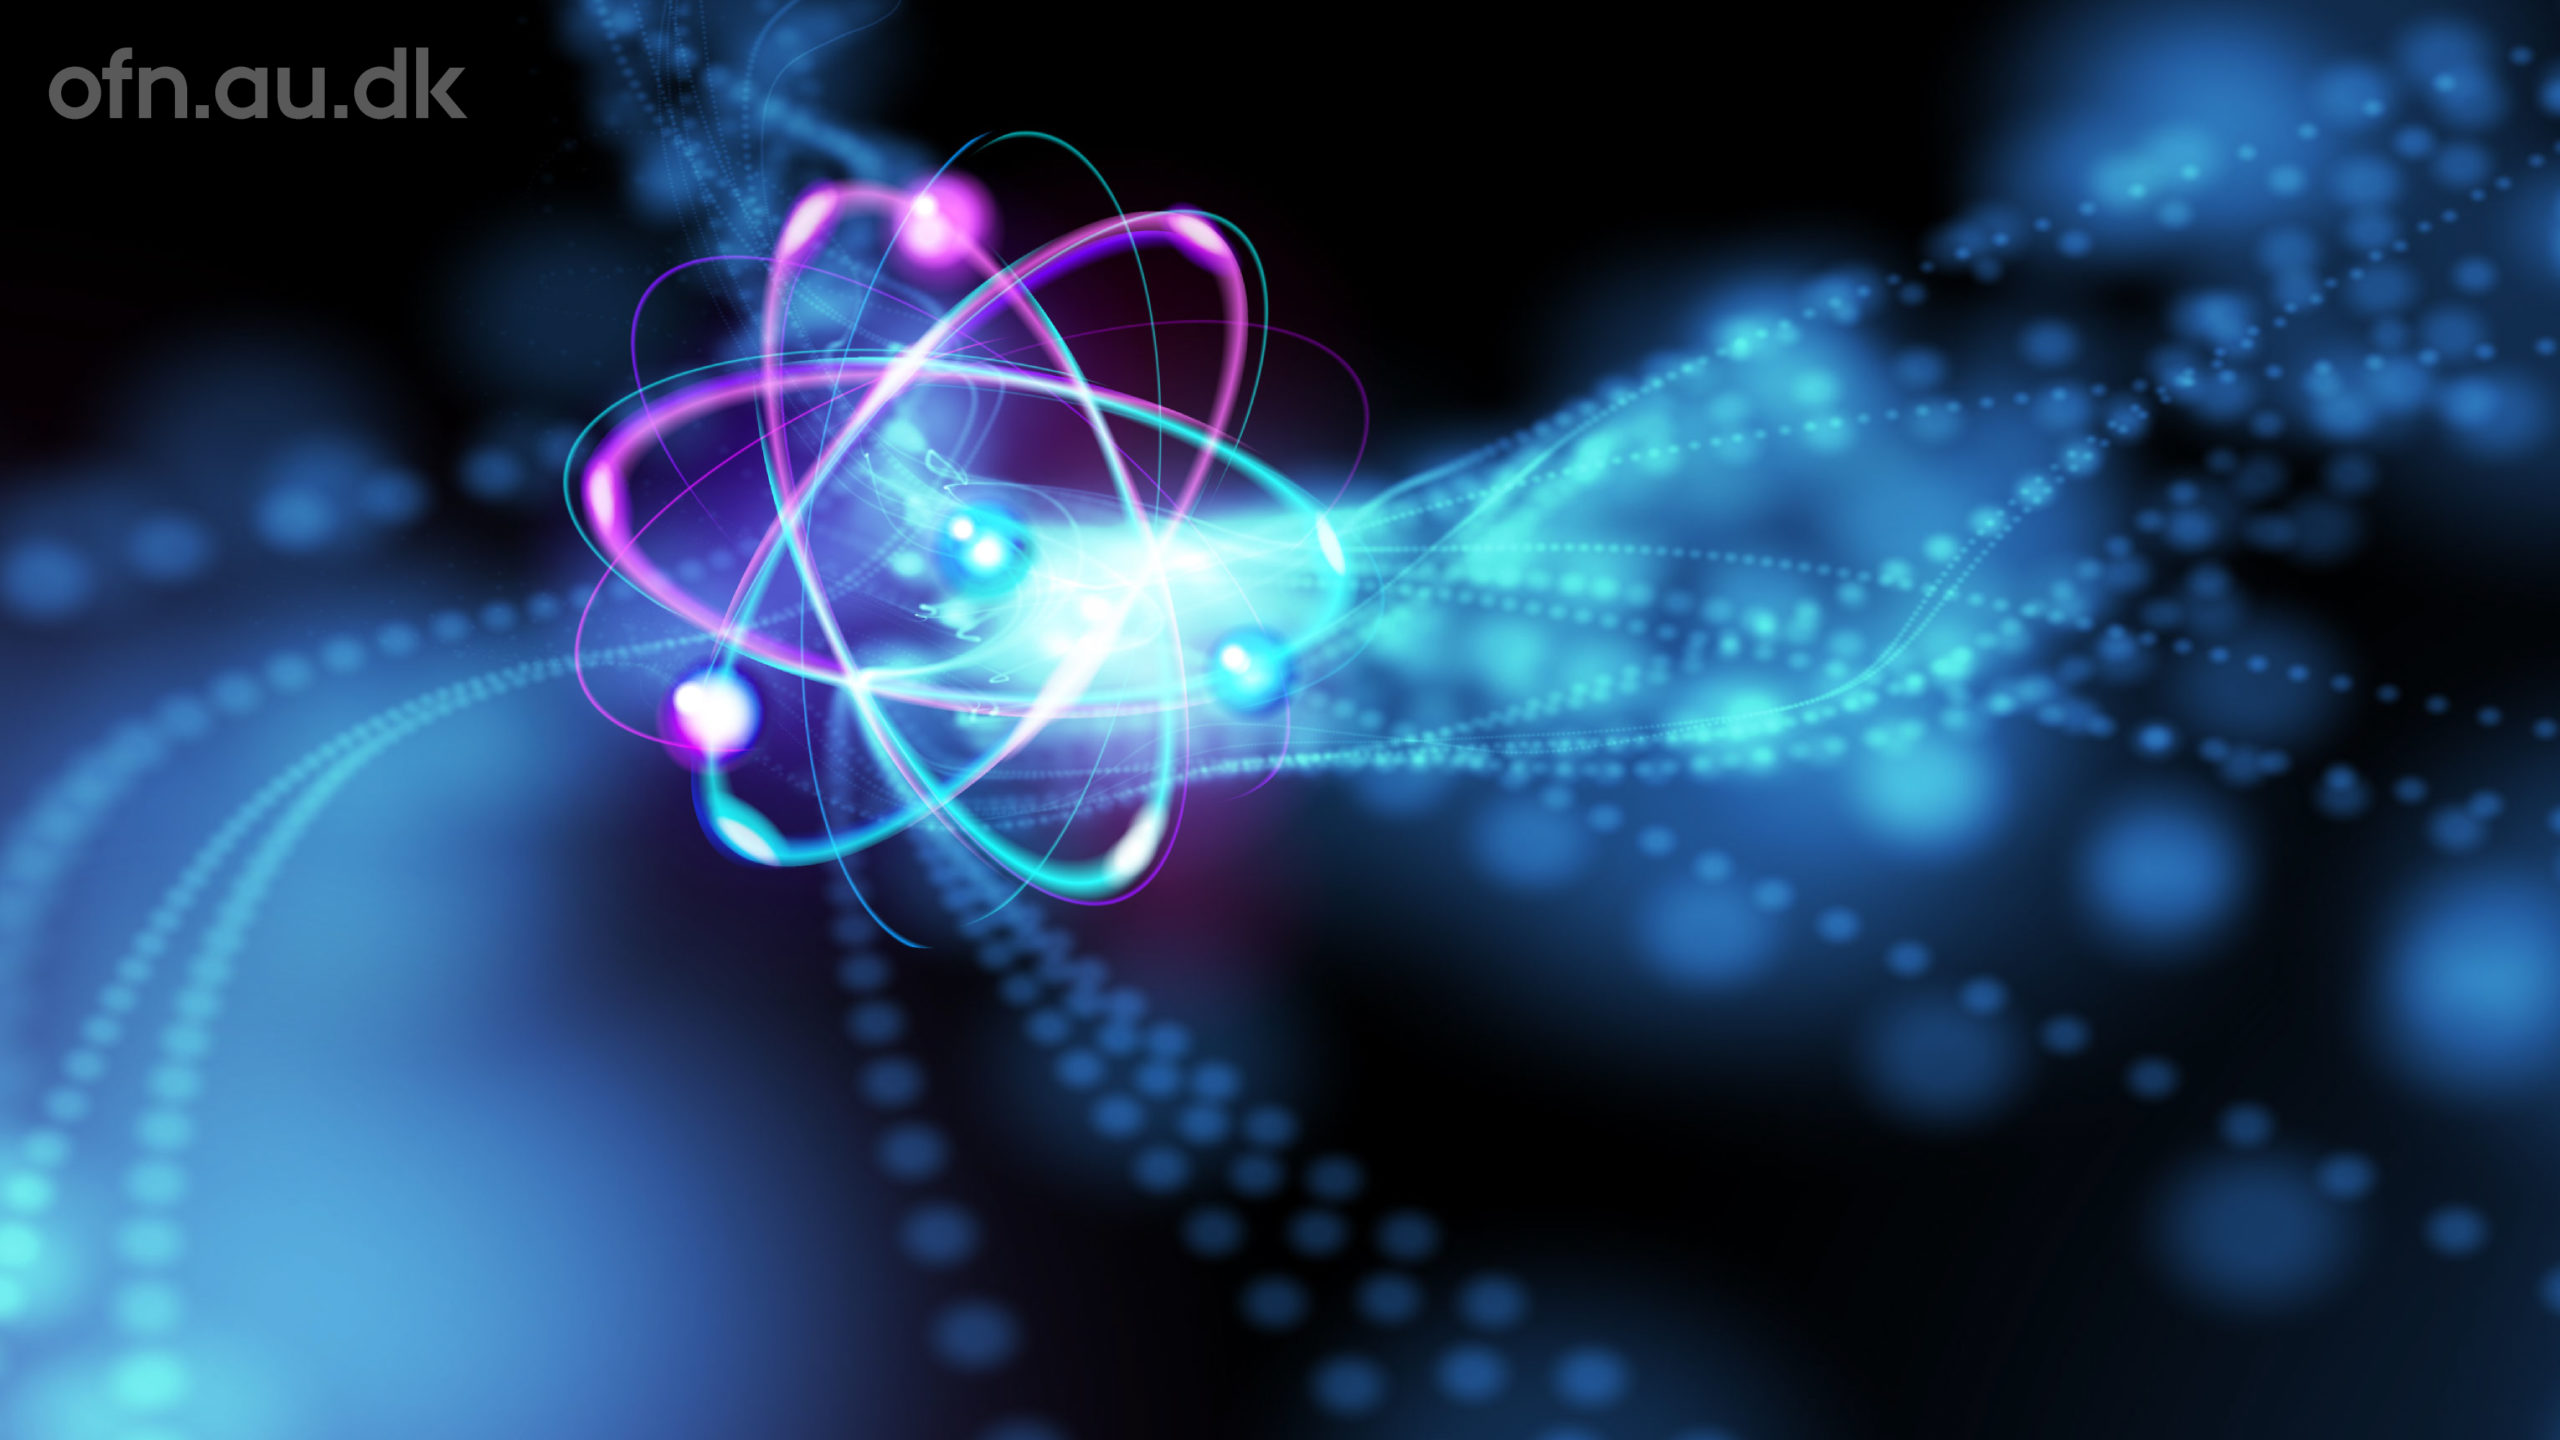 AU-LIVESTREAM: Kvantefysikken – atomernes vilde verden